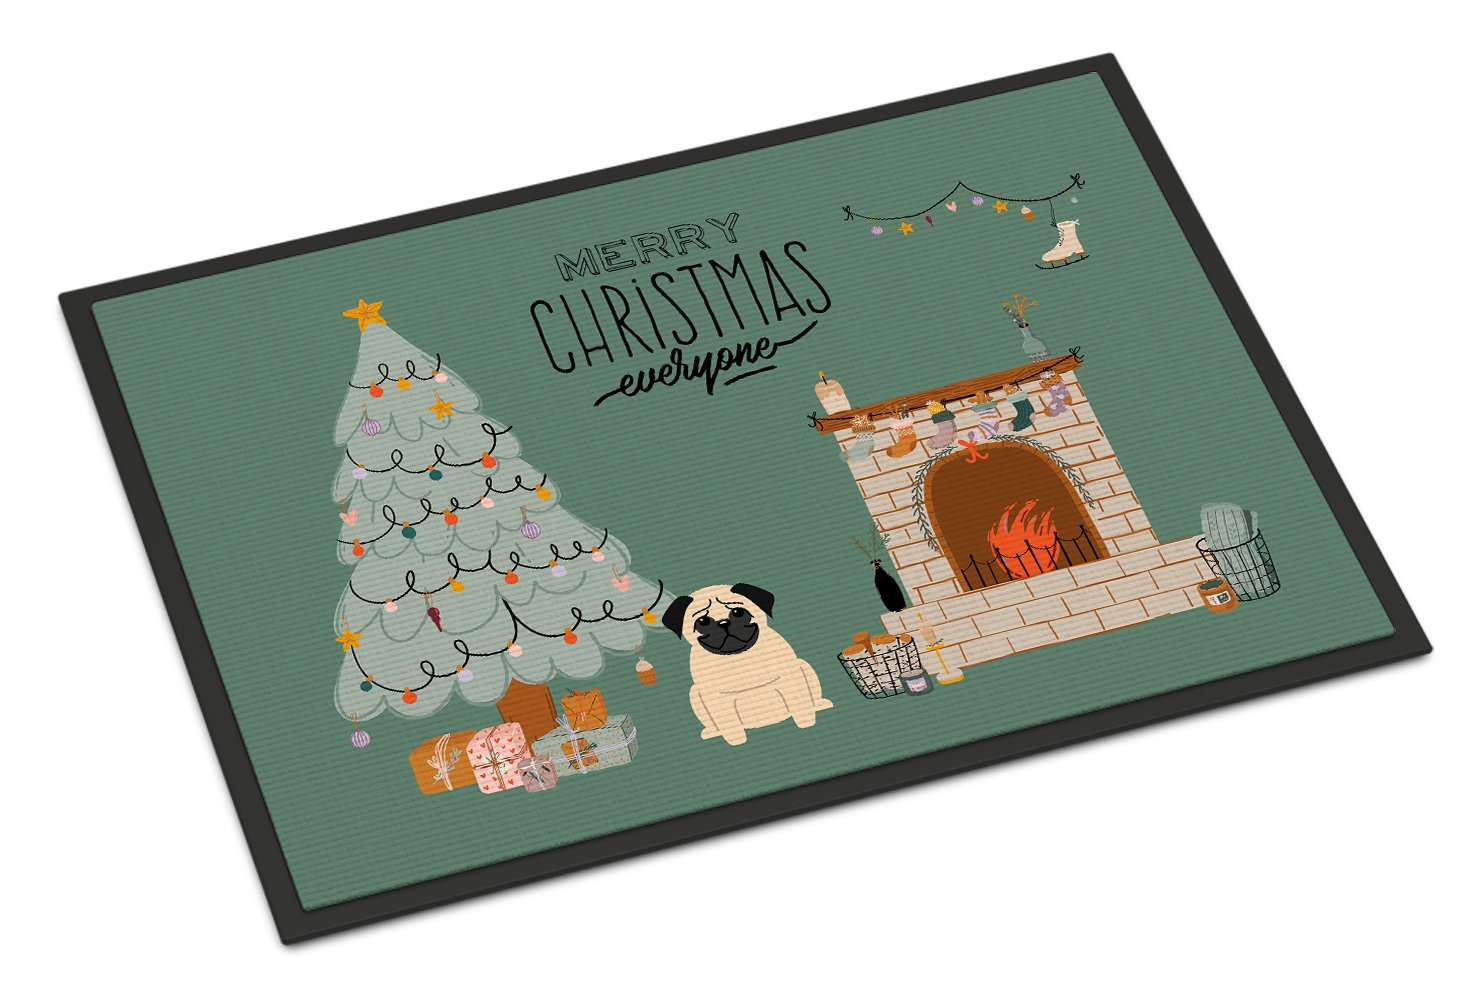 Fawn Pug Christmas Everyone Indoor or Outdoor Mat 24x36 CK7571JMAT by Caroline's Treasures